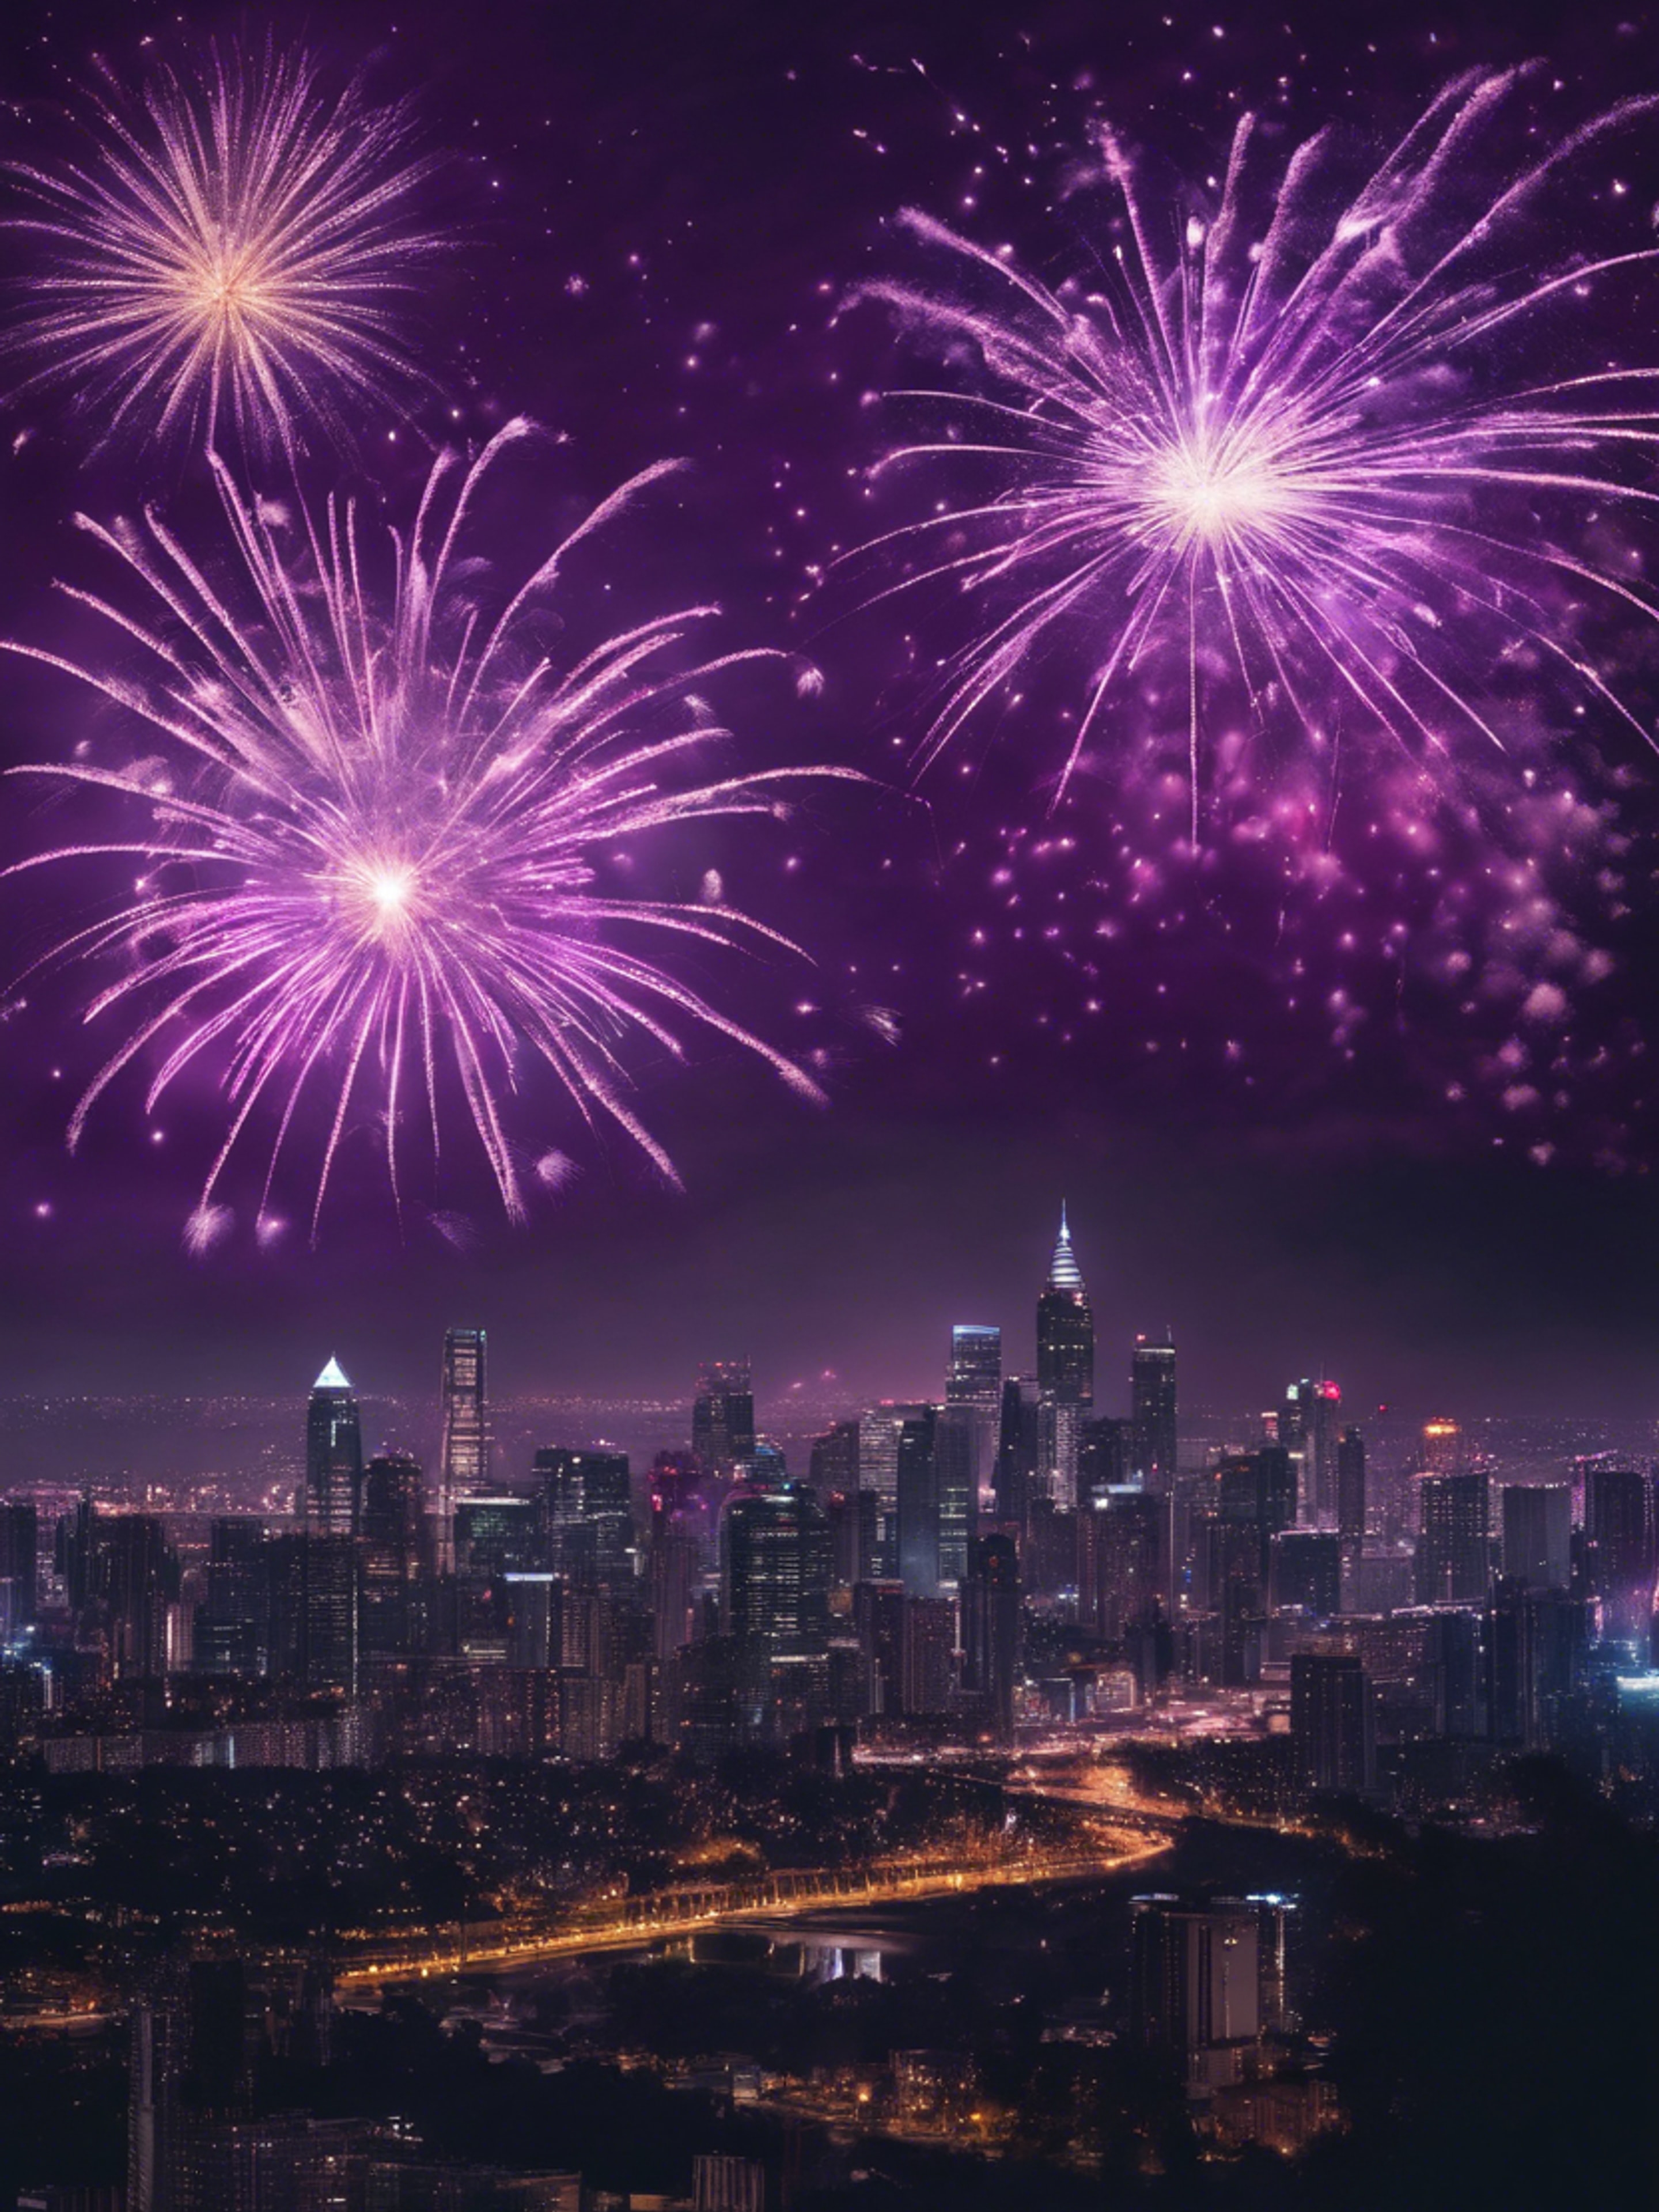 Dark purple fireworks illuminating the night's sky over an illuminated city skyline. ورق الجدران[a2398988017f44d3a04c]